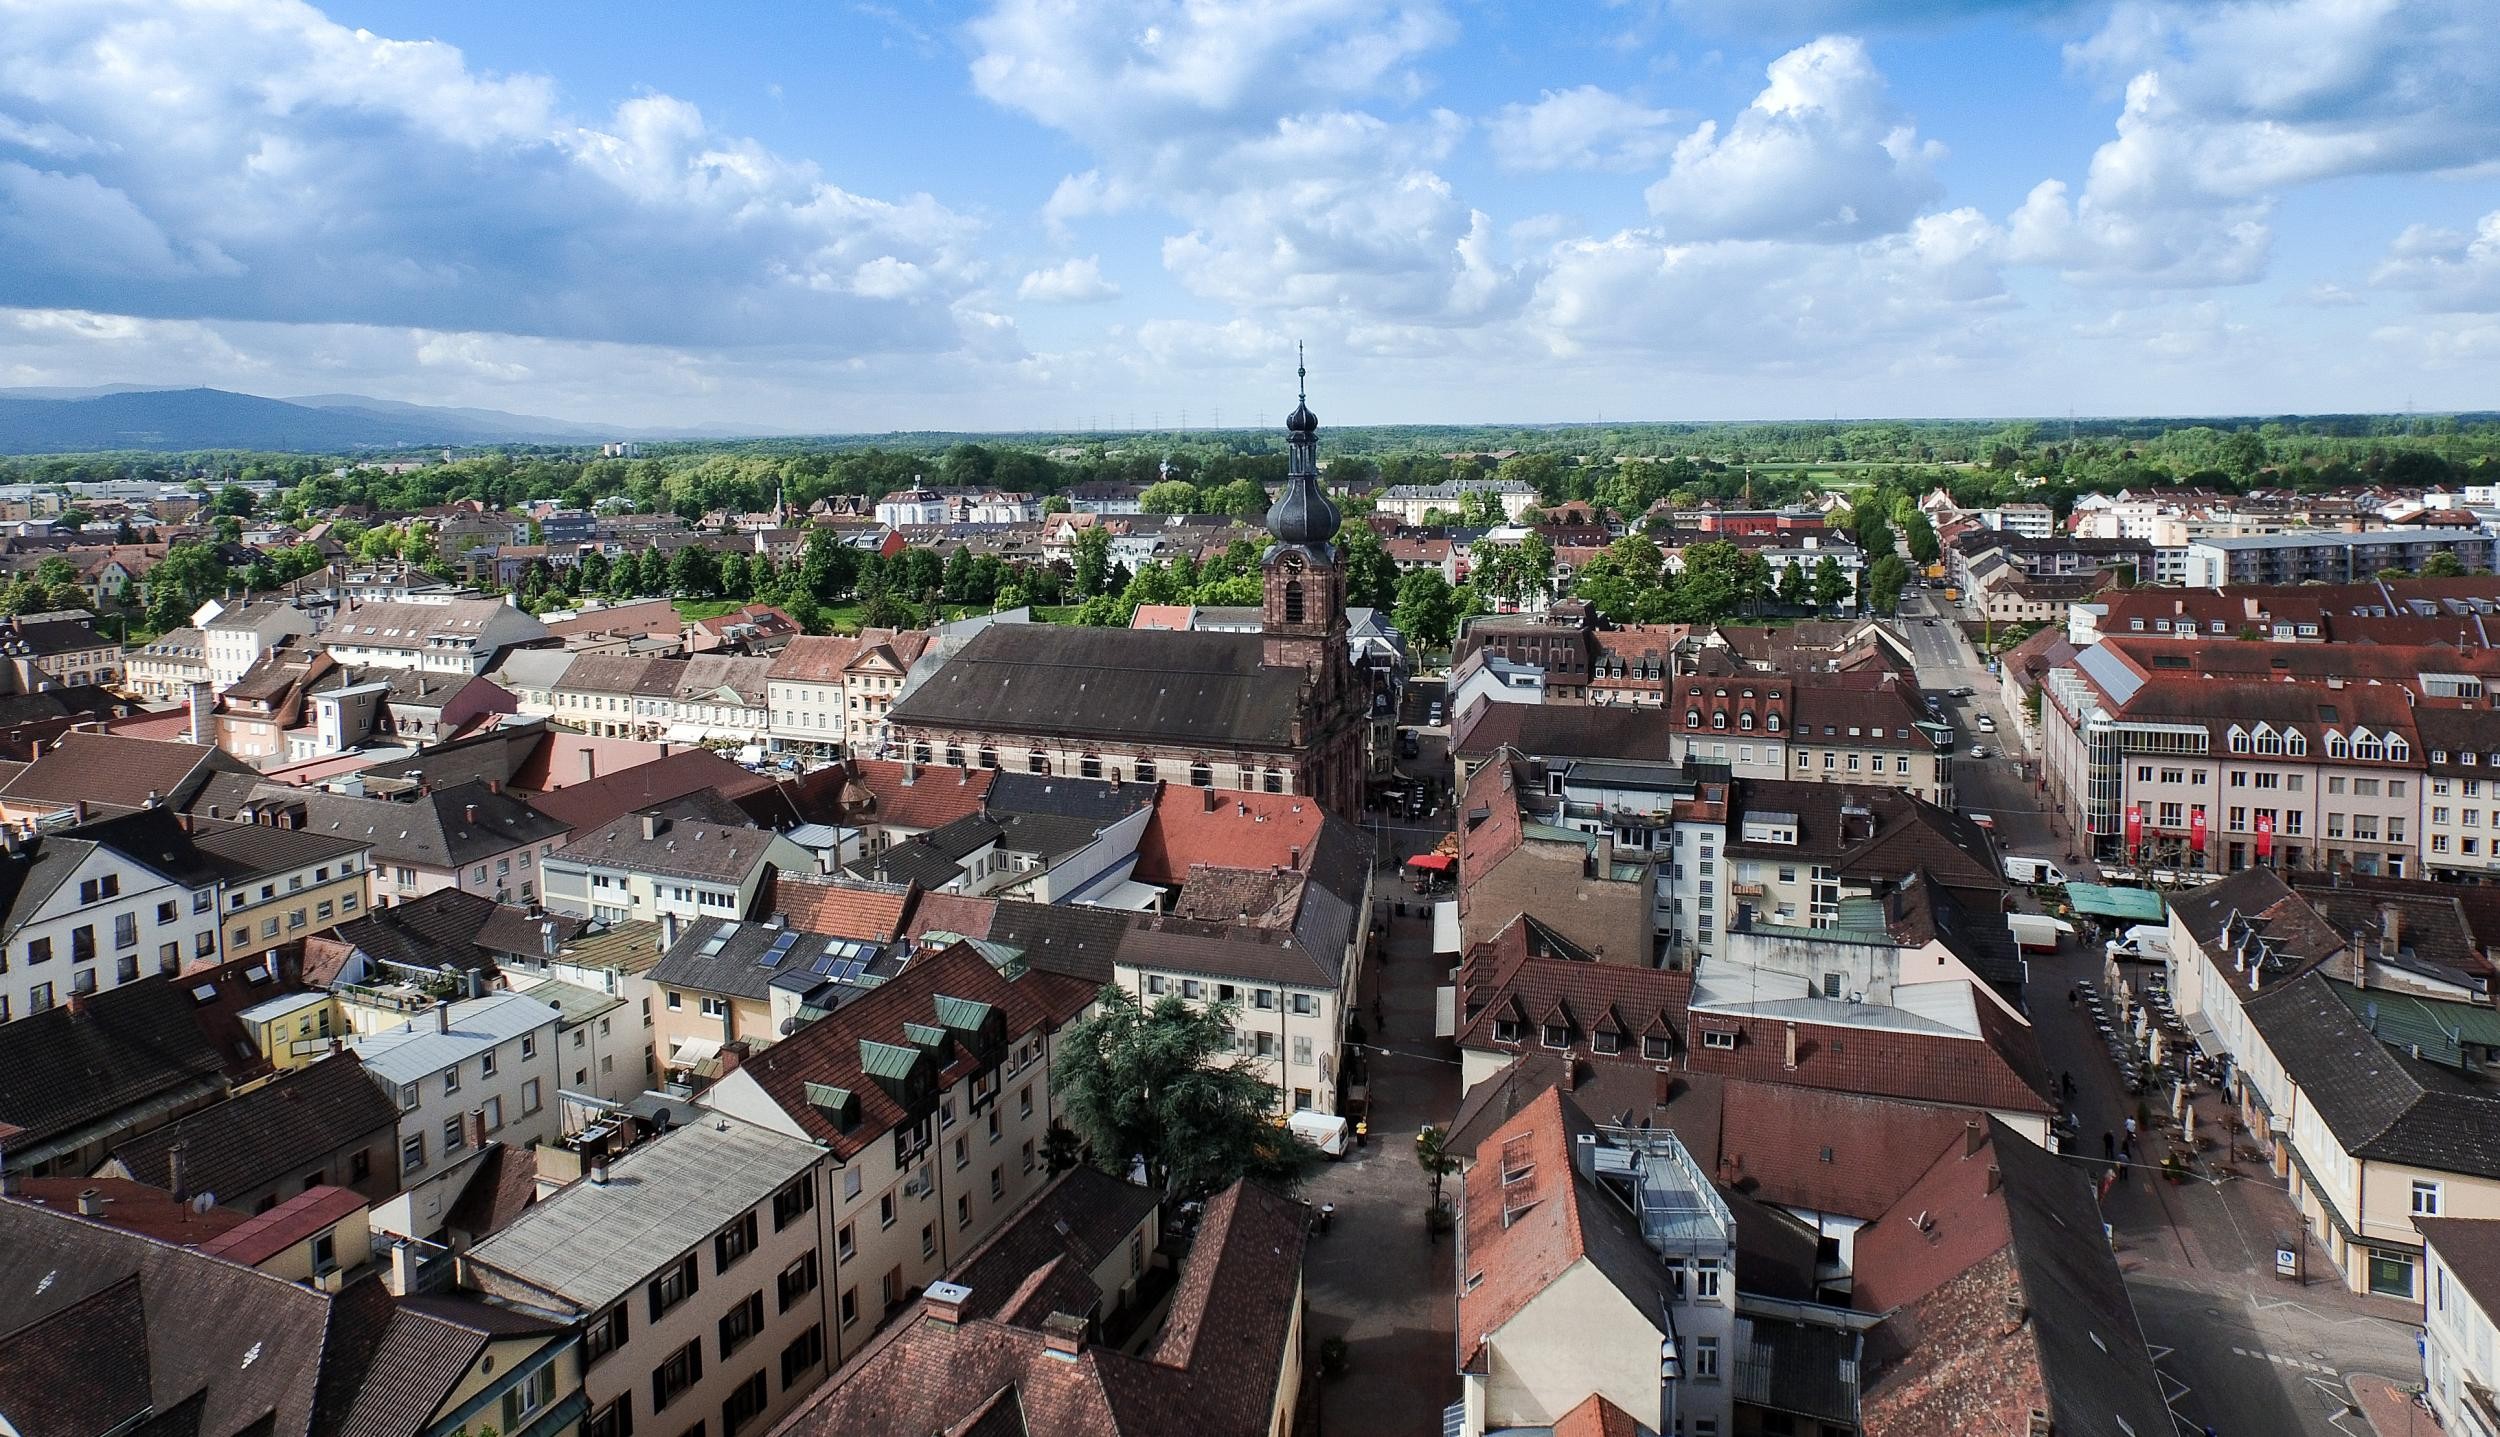 Luftaufnahme Innenstadt Rastatt